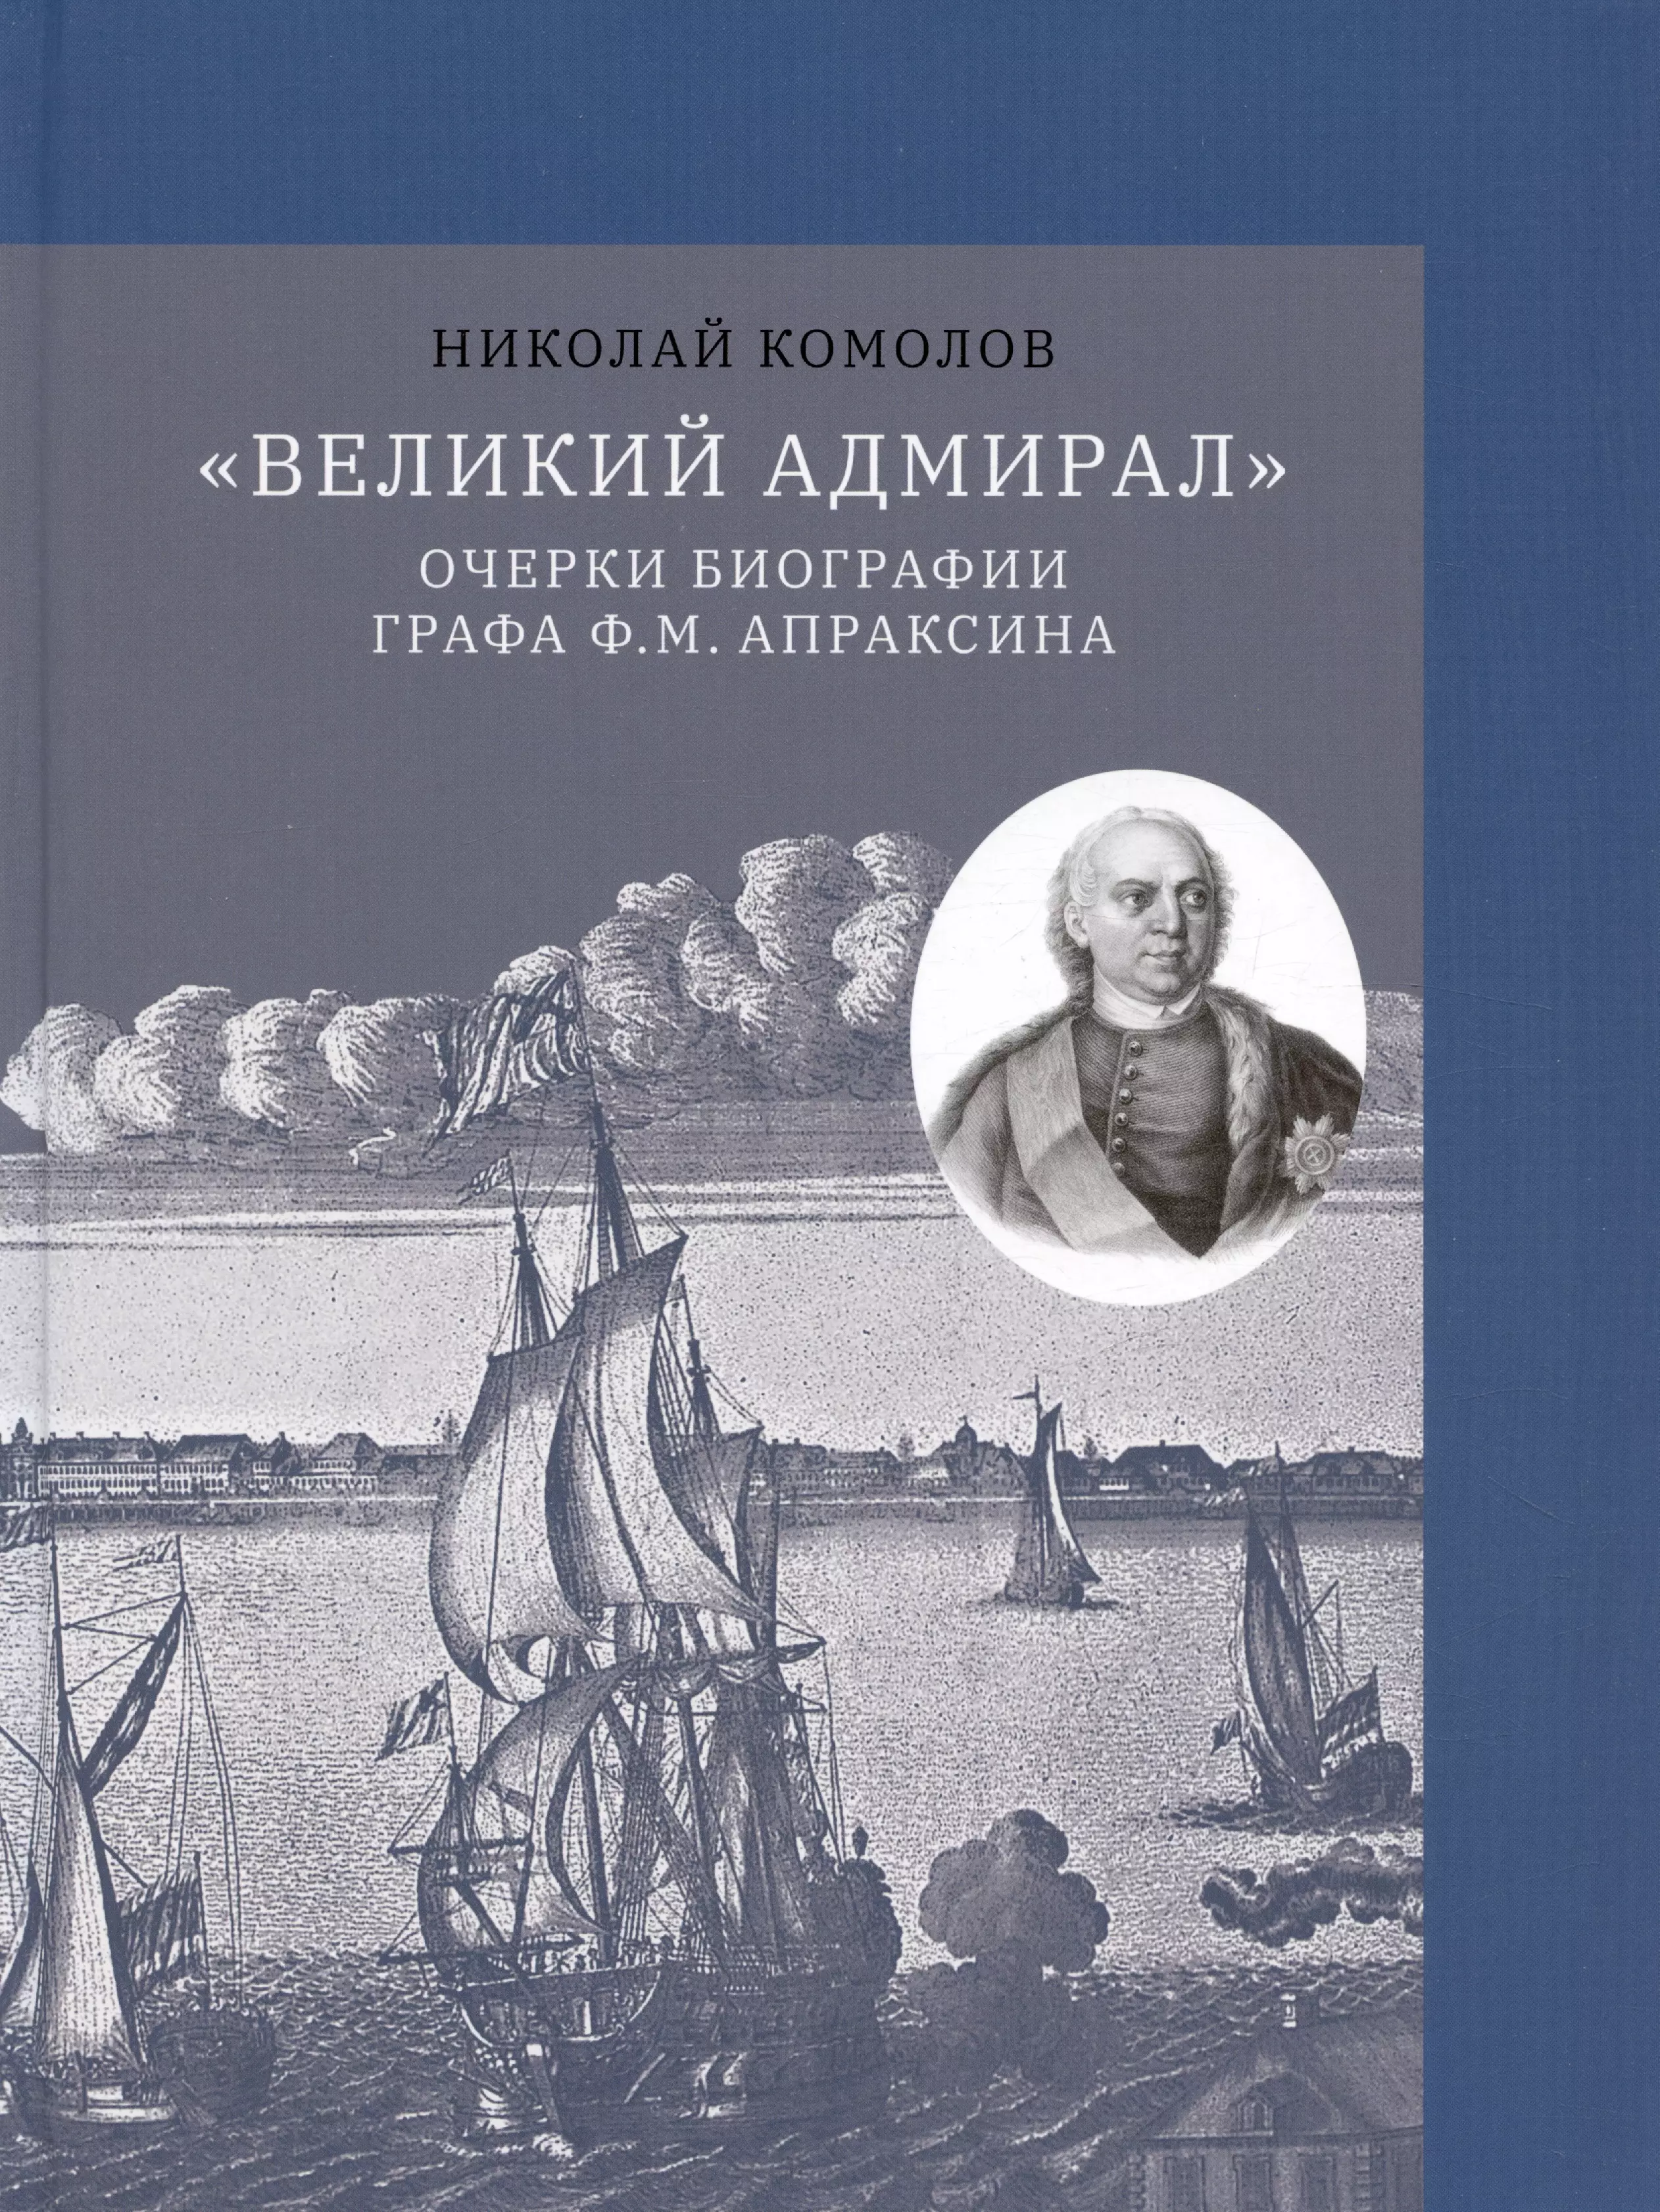 "Великий адмирал": очерки биографии графа Ф.М. Апраксина. 1661-1728